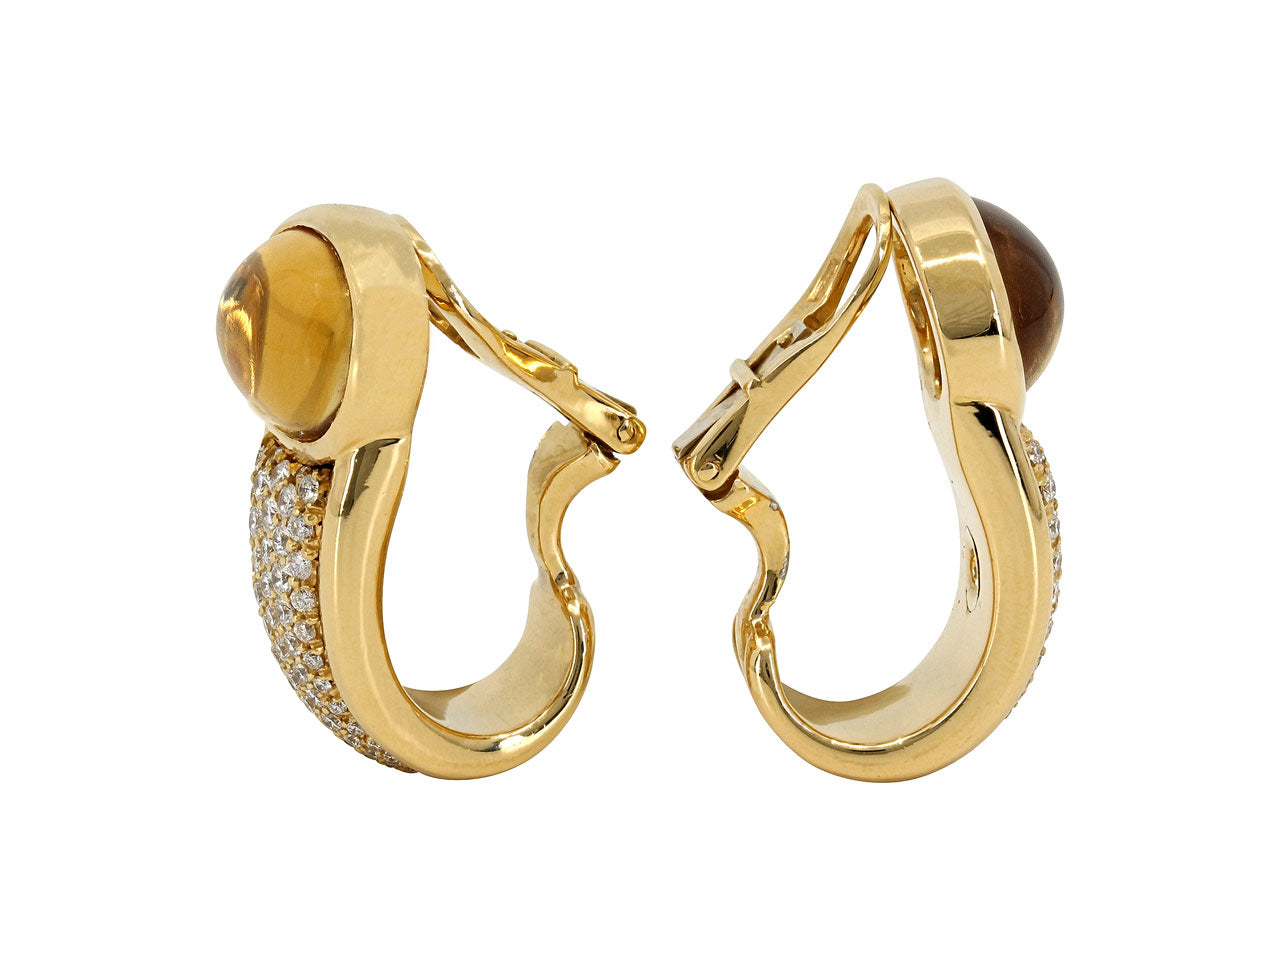 Citrine and Diamond Earrings in 18K Gold